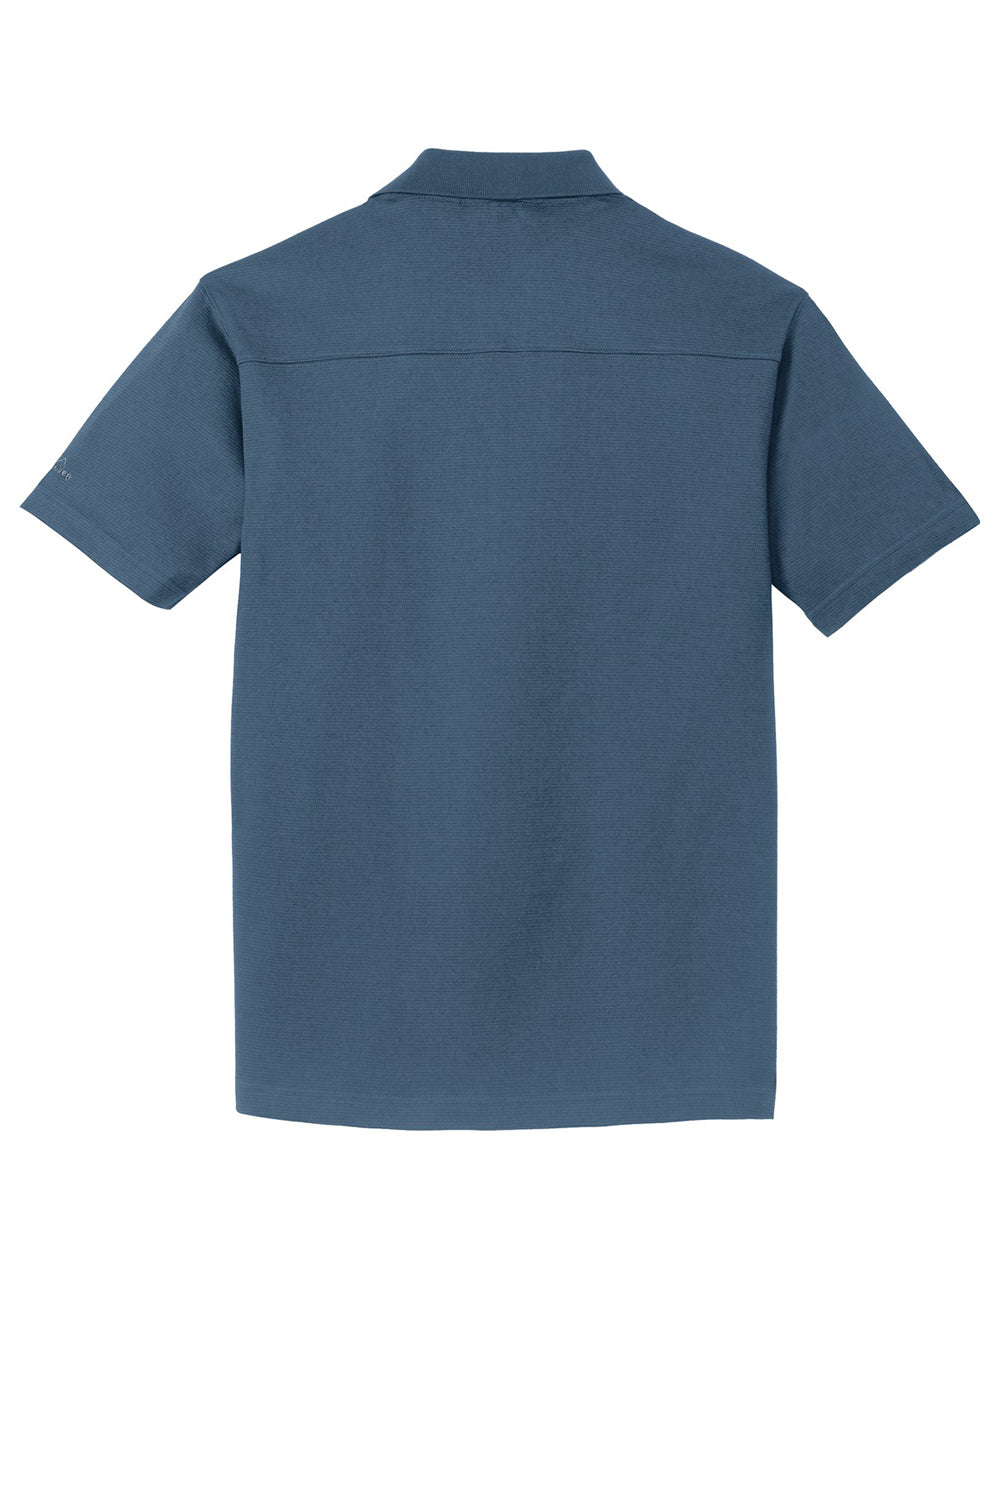 Eddie Bauer EB102 Mens Performance UV Protection Short Sleeve Polo Shirt Coast Blue Flat Back